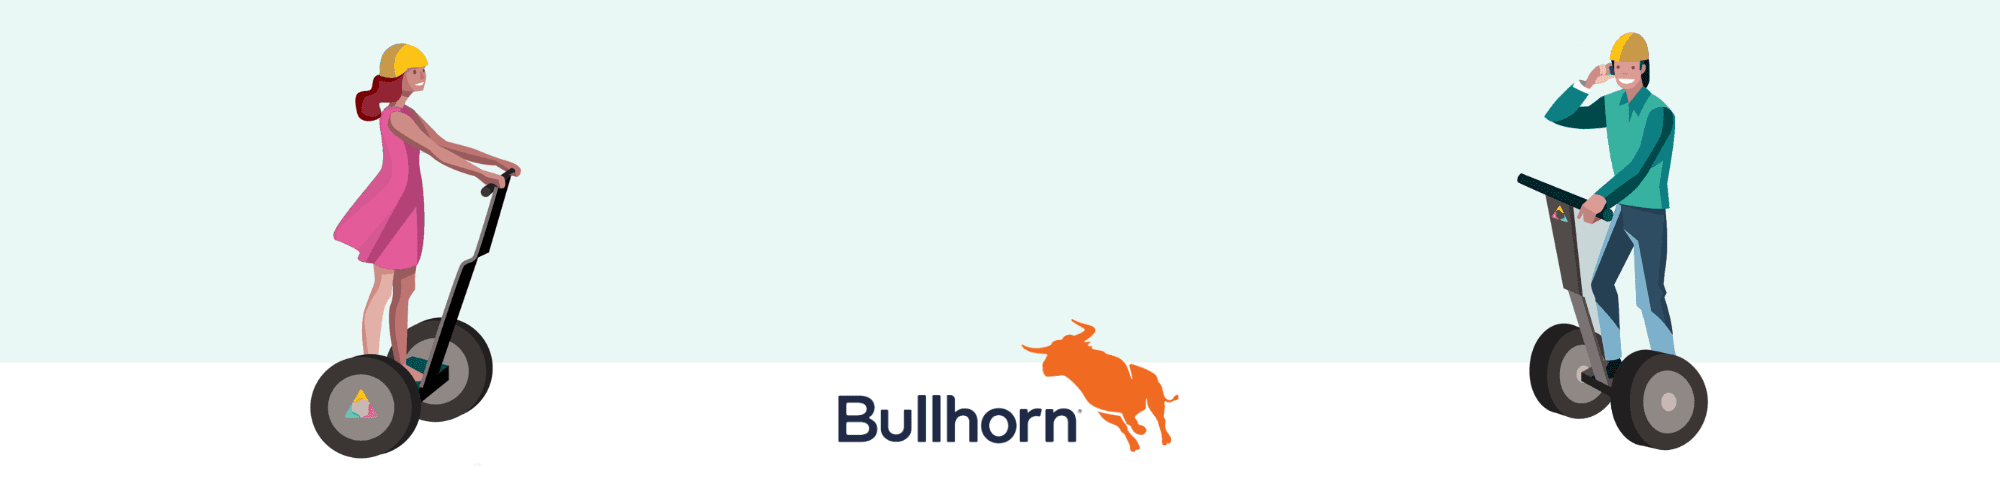 Bullhorn-crm-hack-for-recruiters-banner